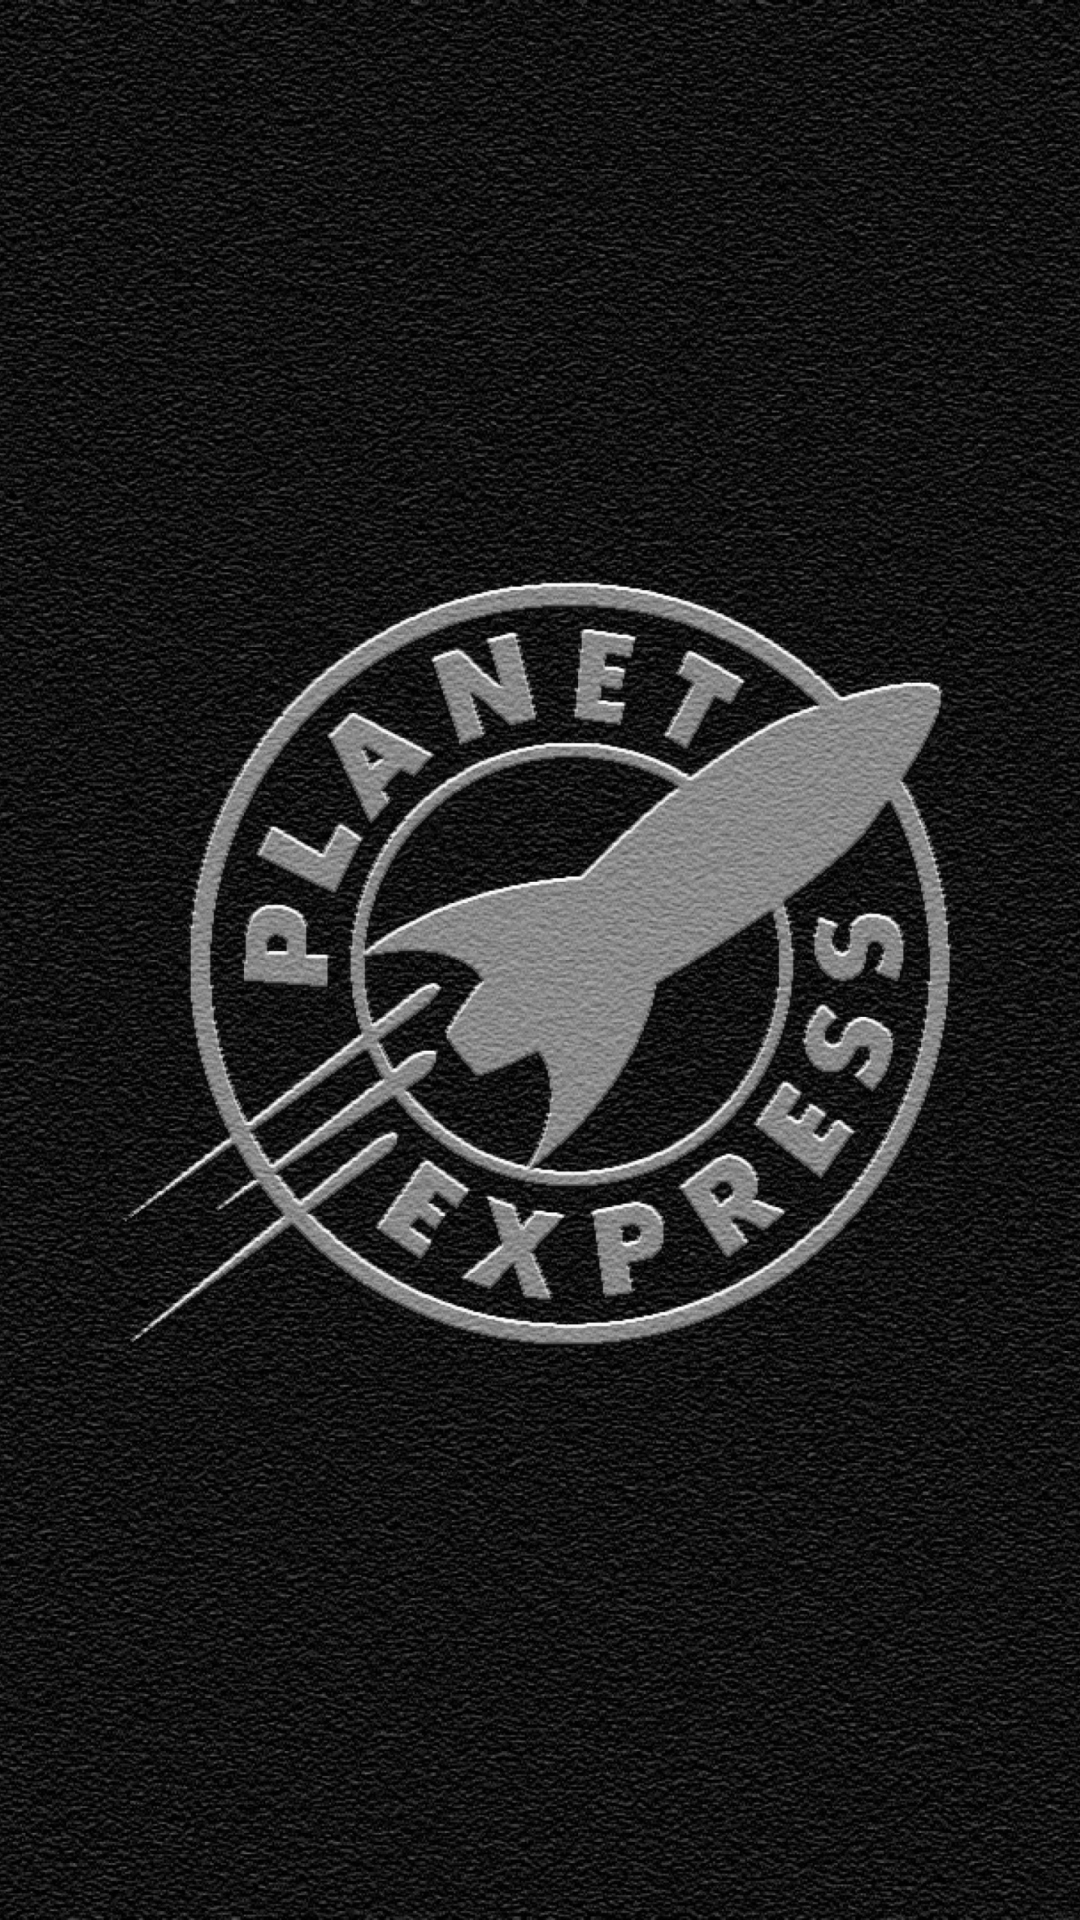 Planet Express wallpaper 1080x1920